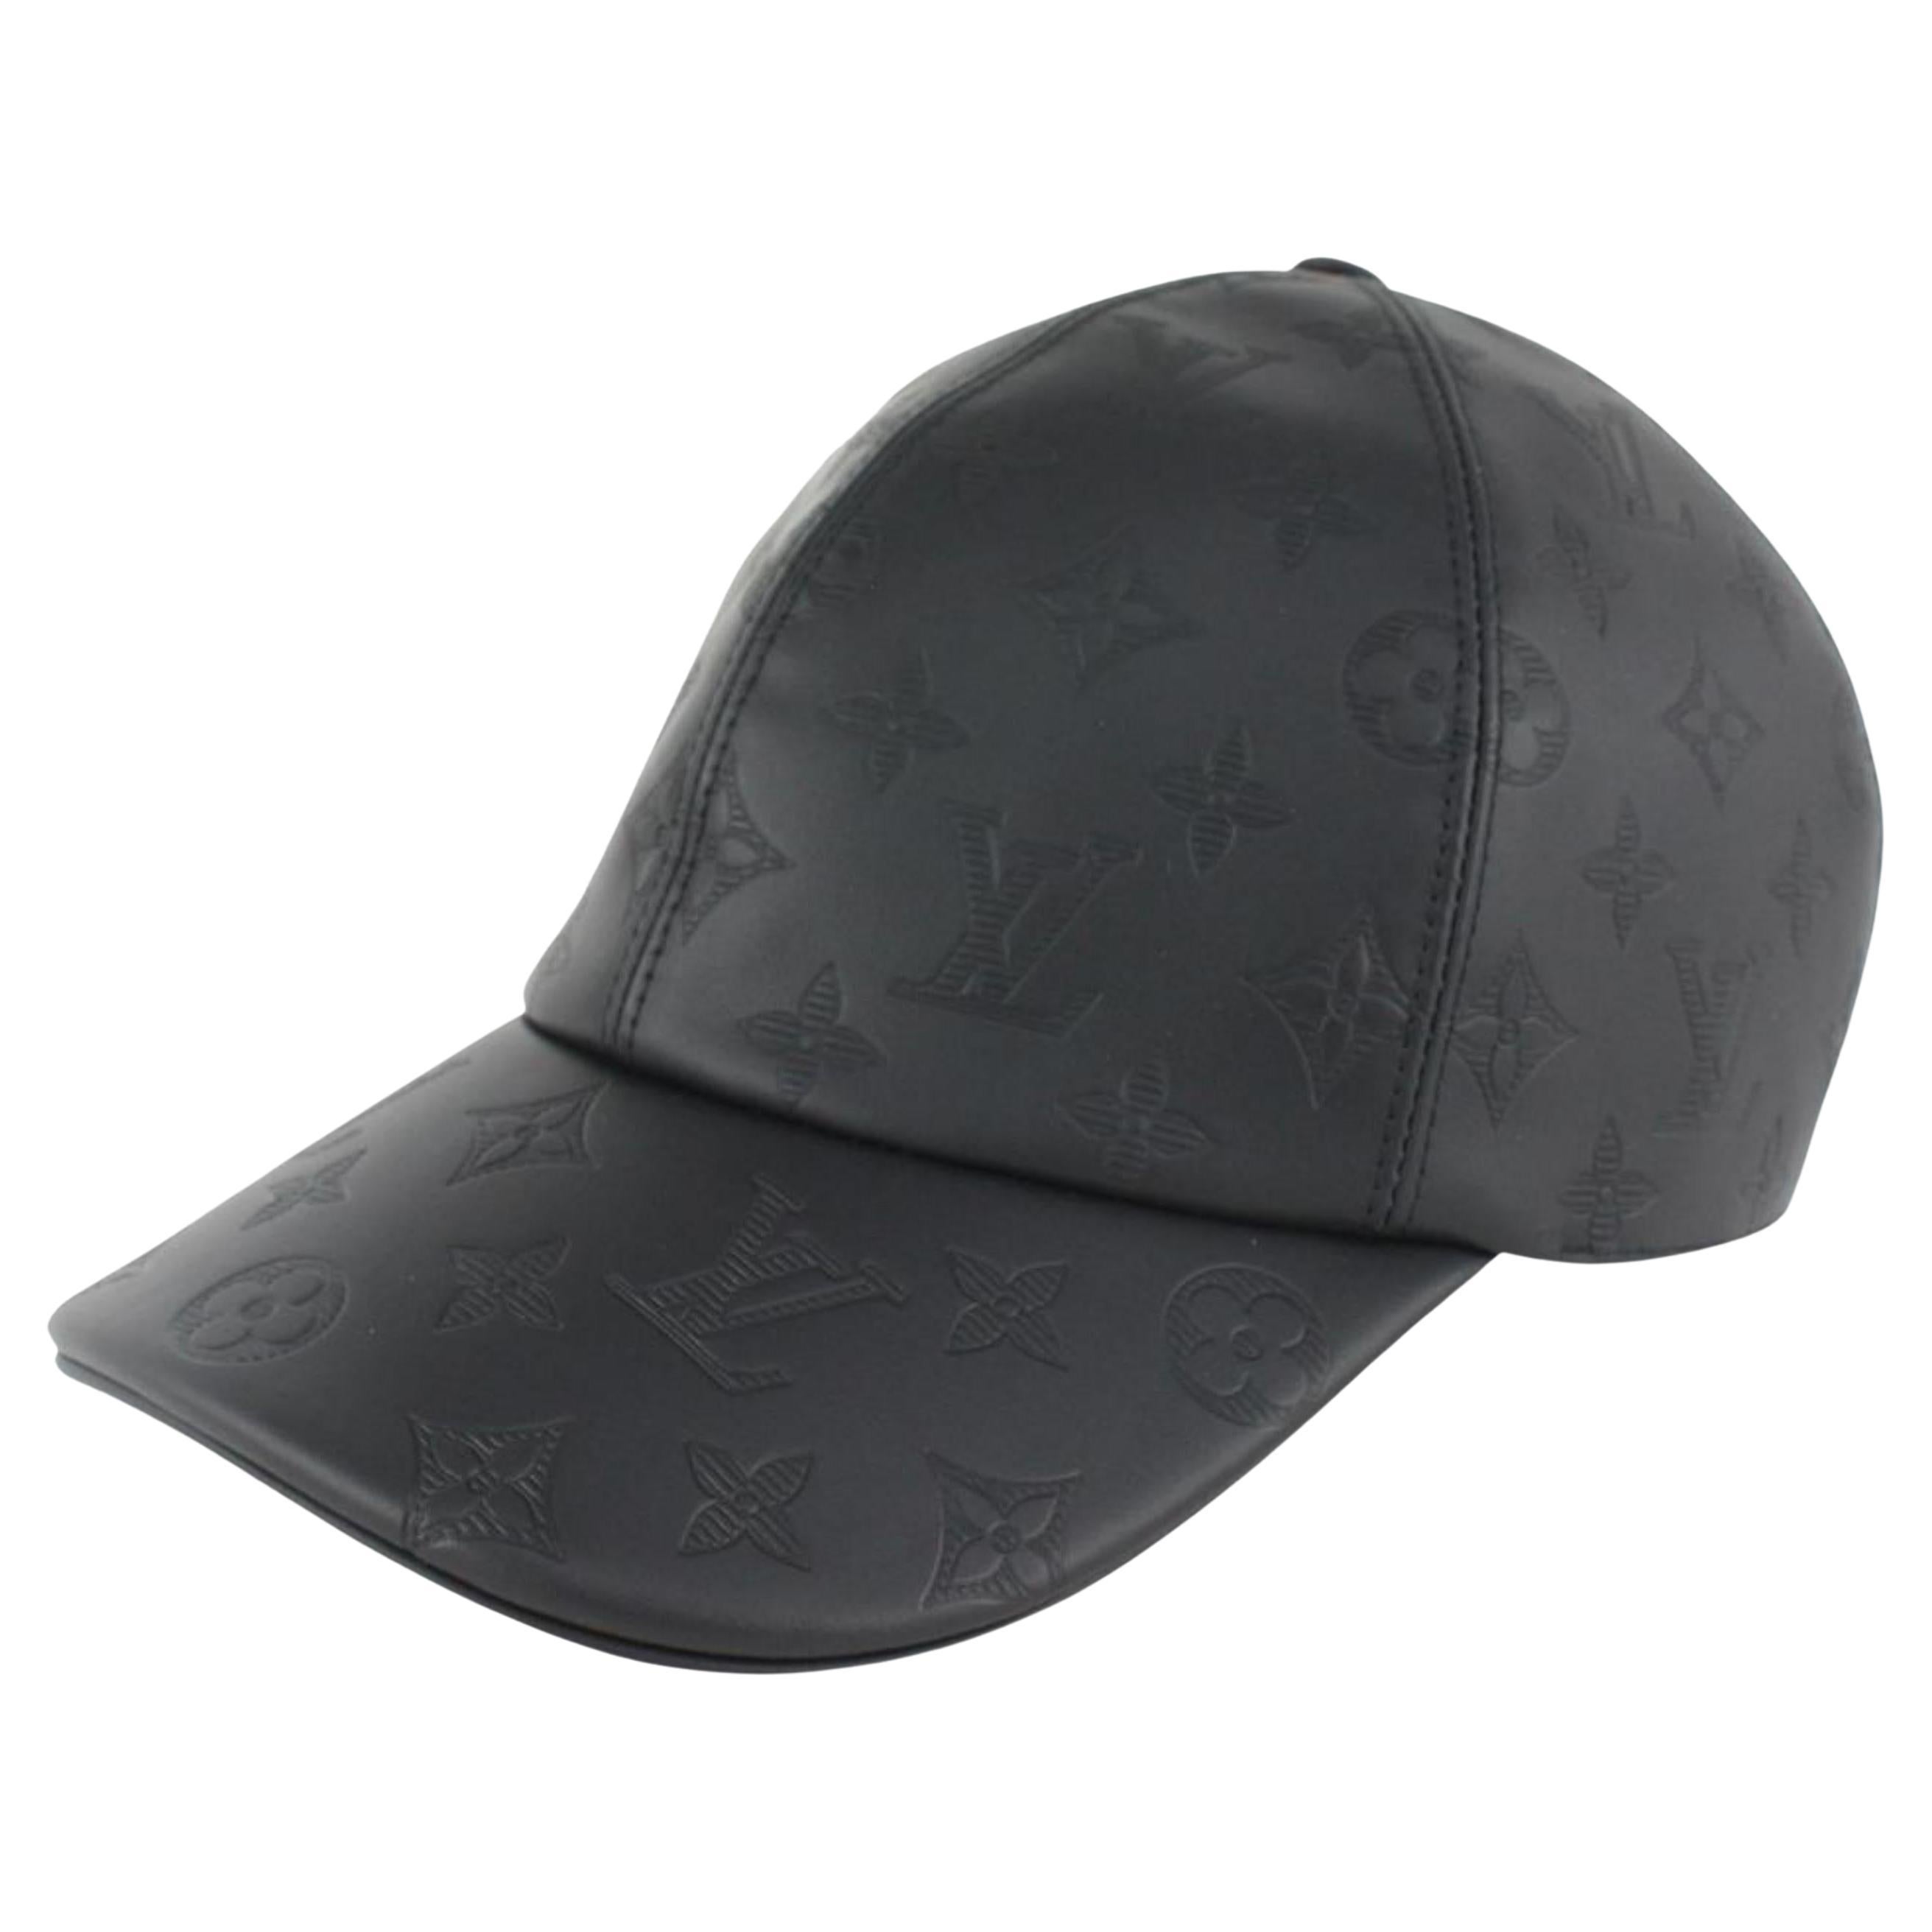 Louis Vuitton Size 60 Black Leather Monogram Shadow Cap Baseball Hat 123lv19 For Sale